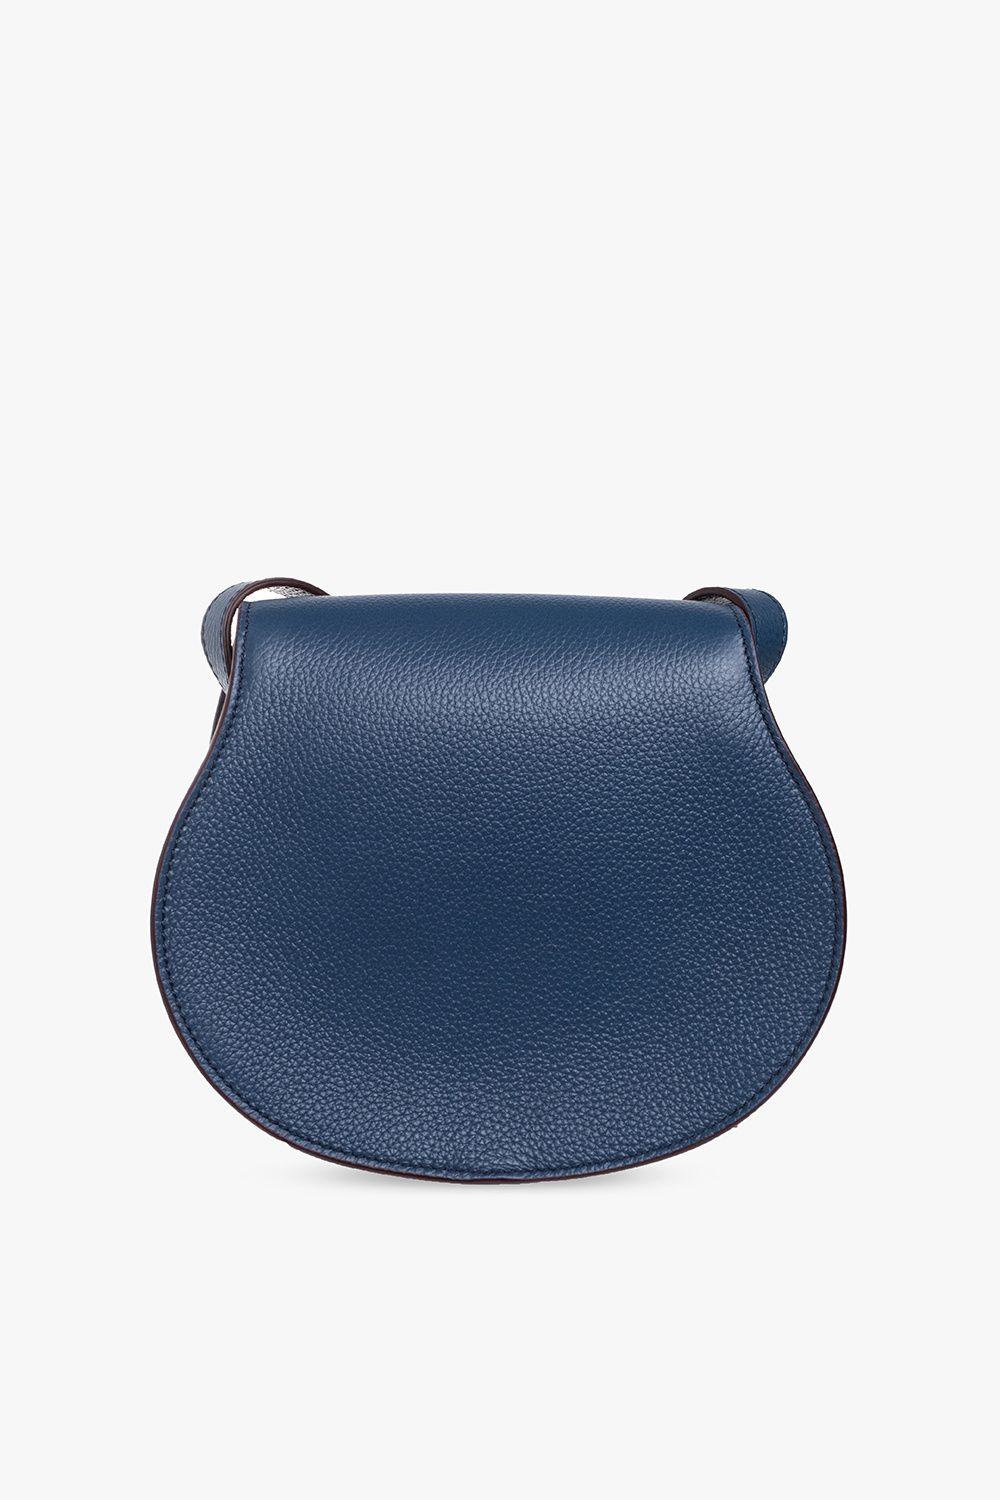 Chloé Marcie Mini Shoulder Bag in Blue